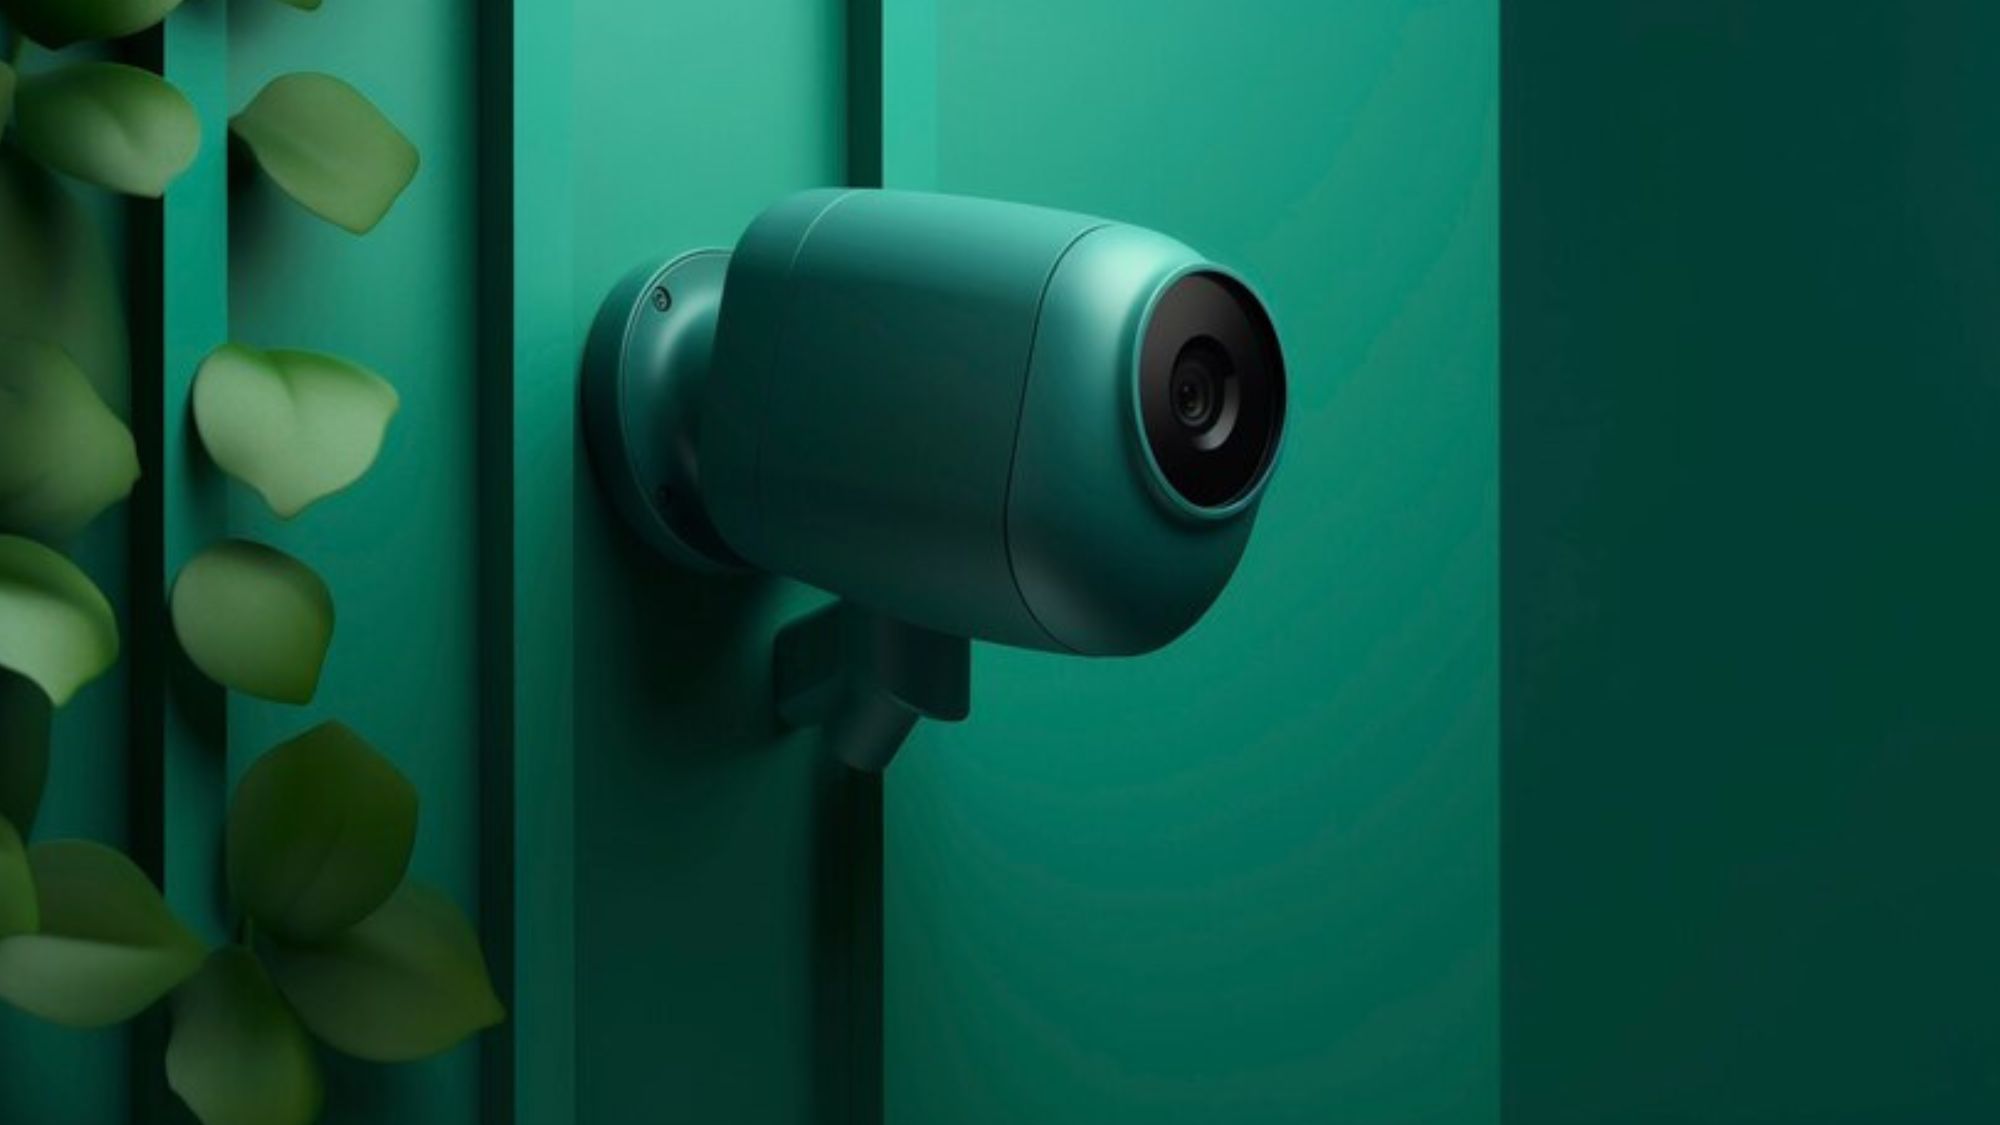 A wireless security camera symbolizing latest technologies on premises safety